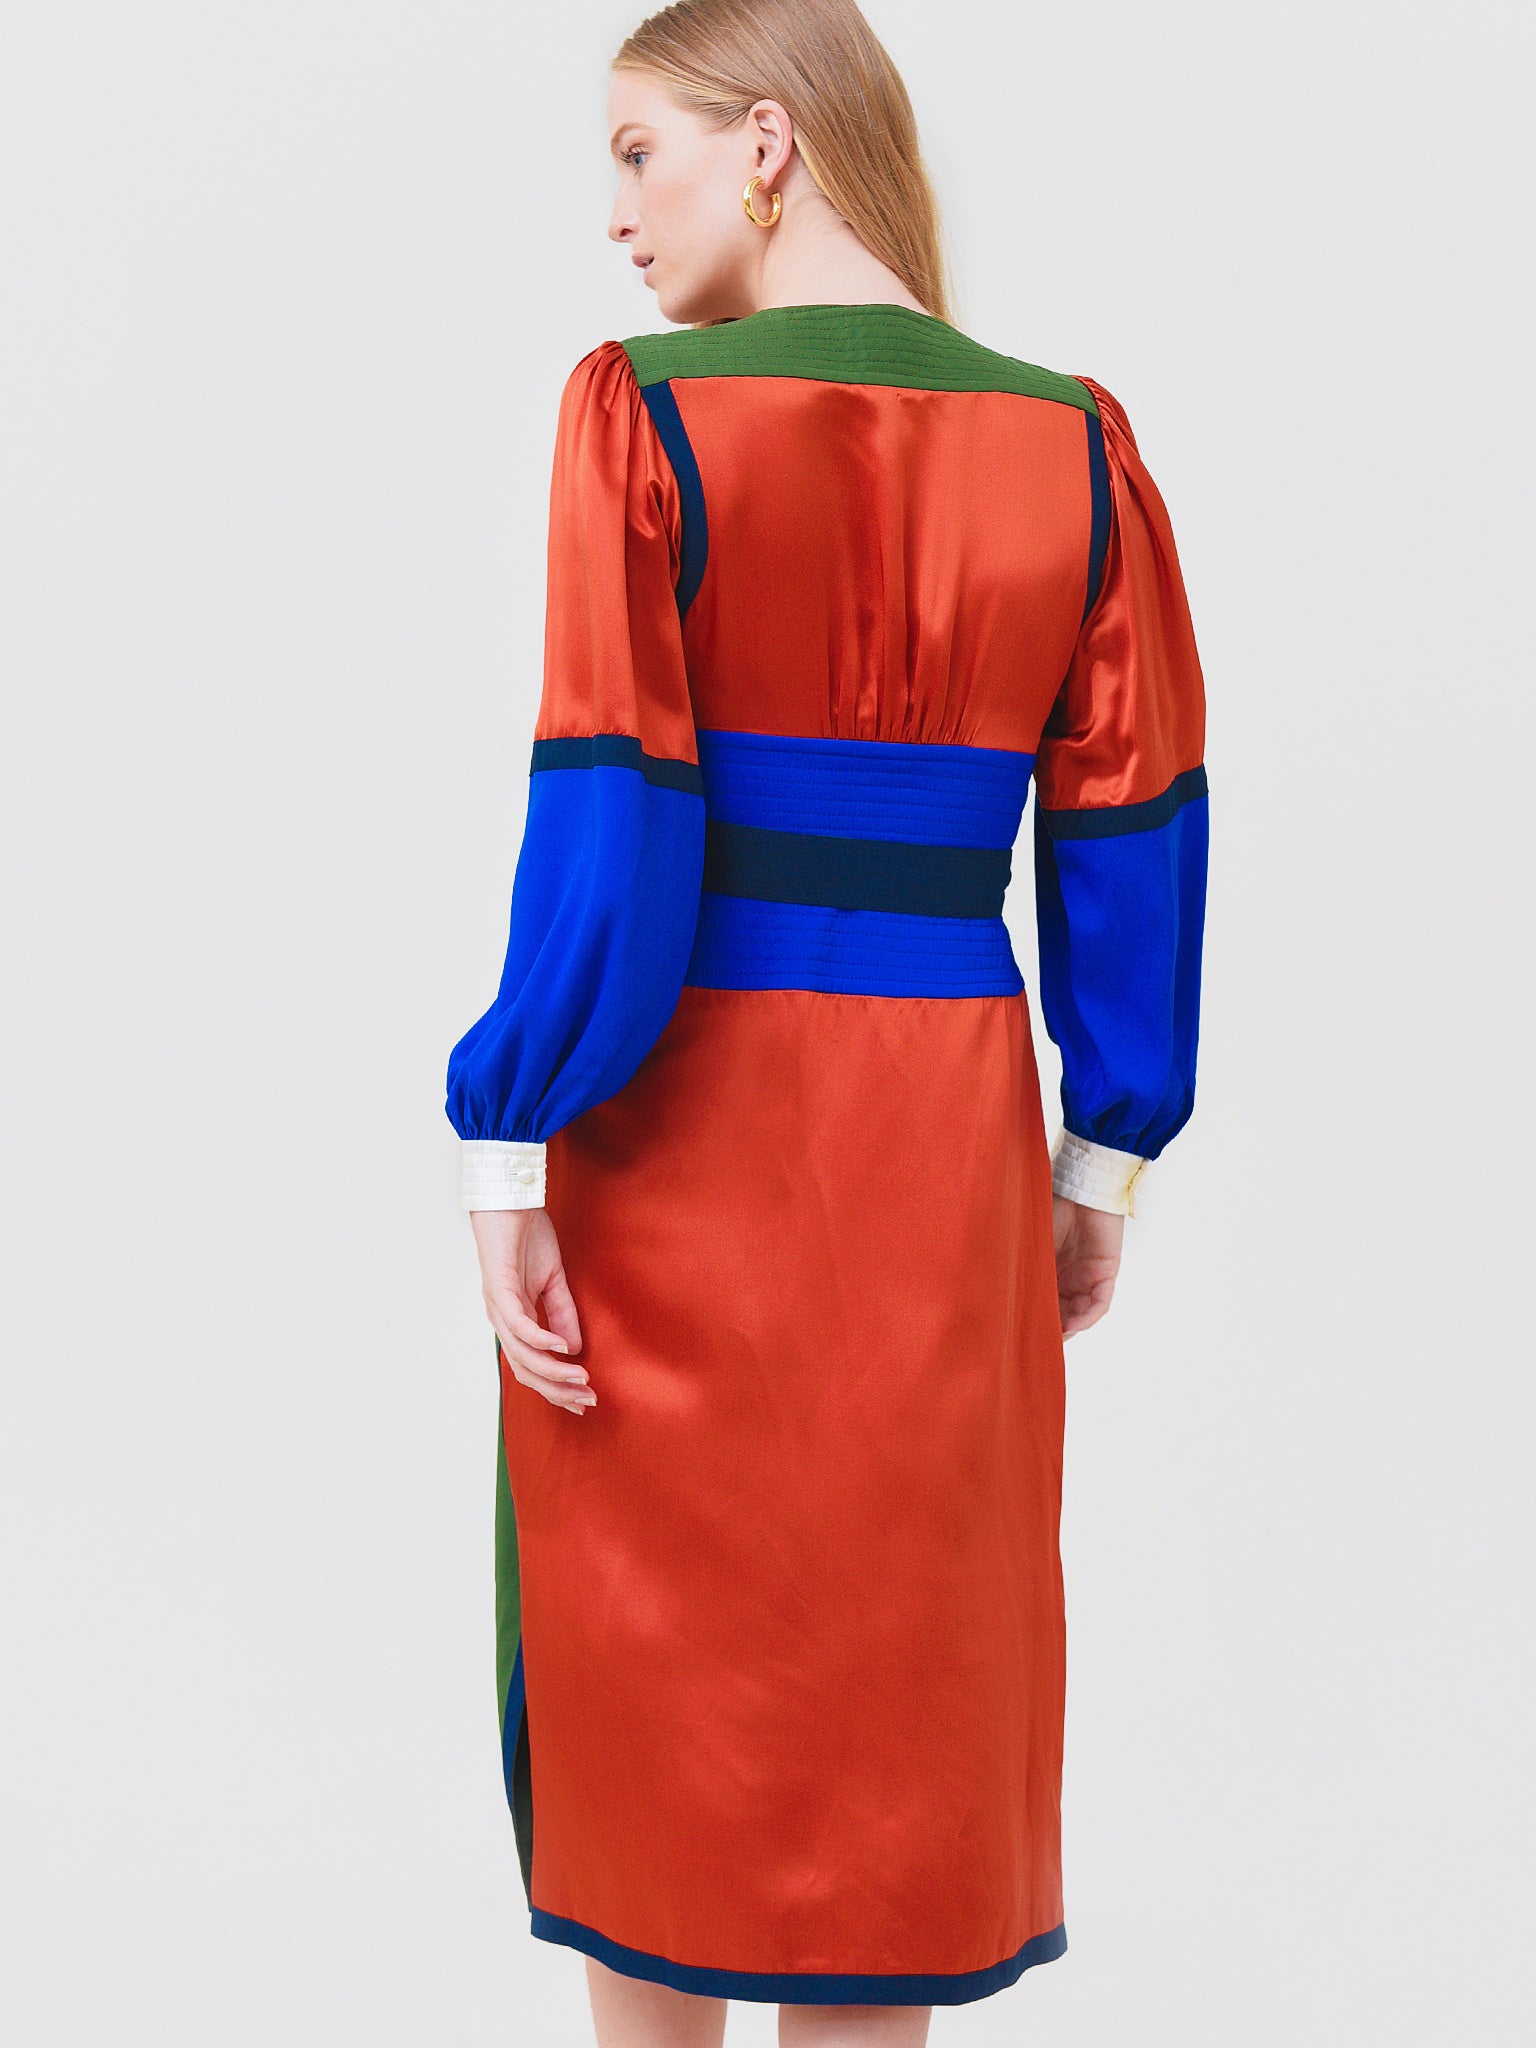 Tory Burch Women's Color-Block Wrap Dress - Saint Bernard